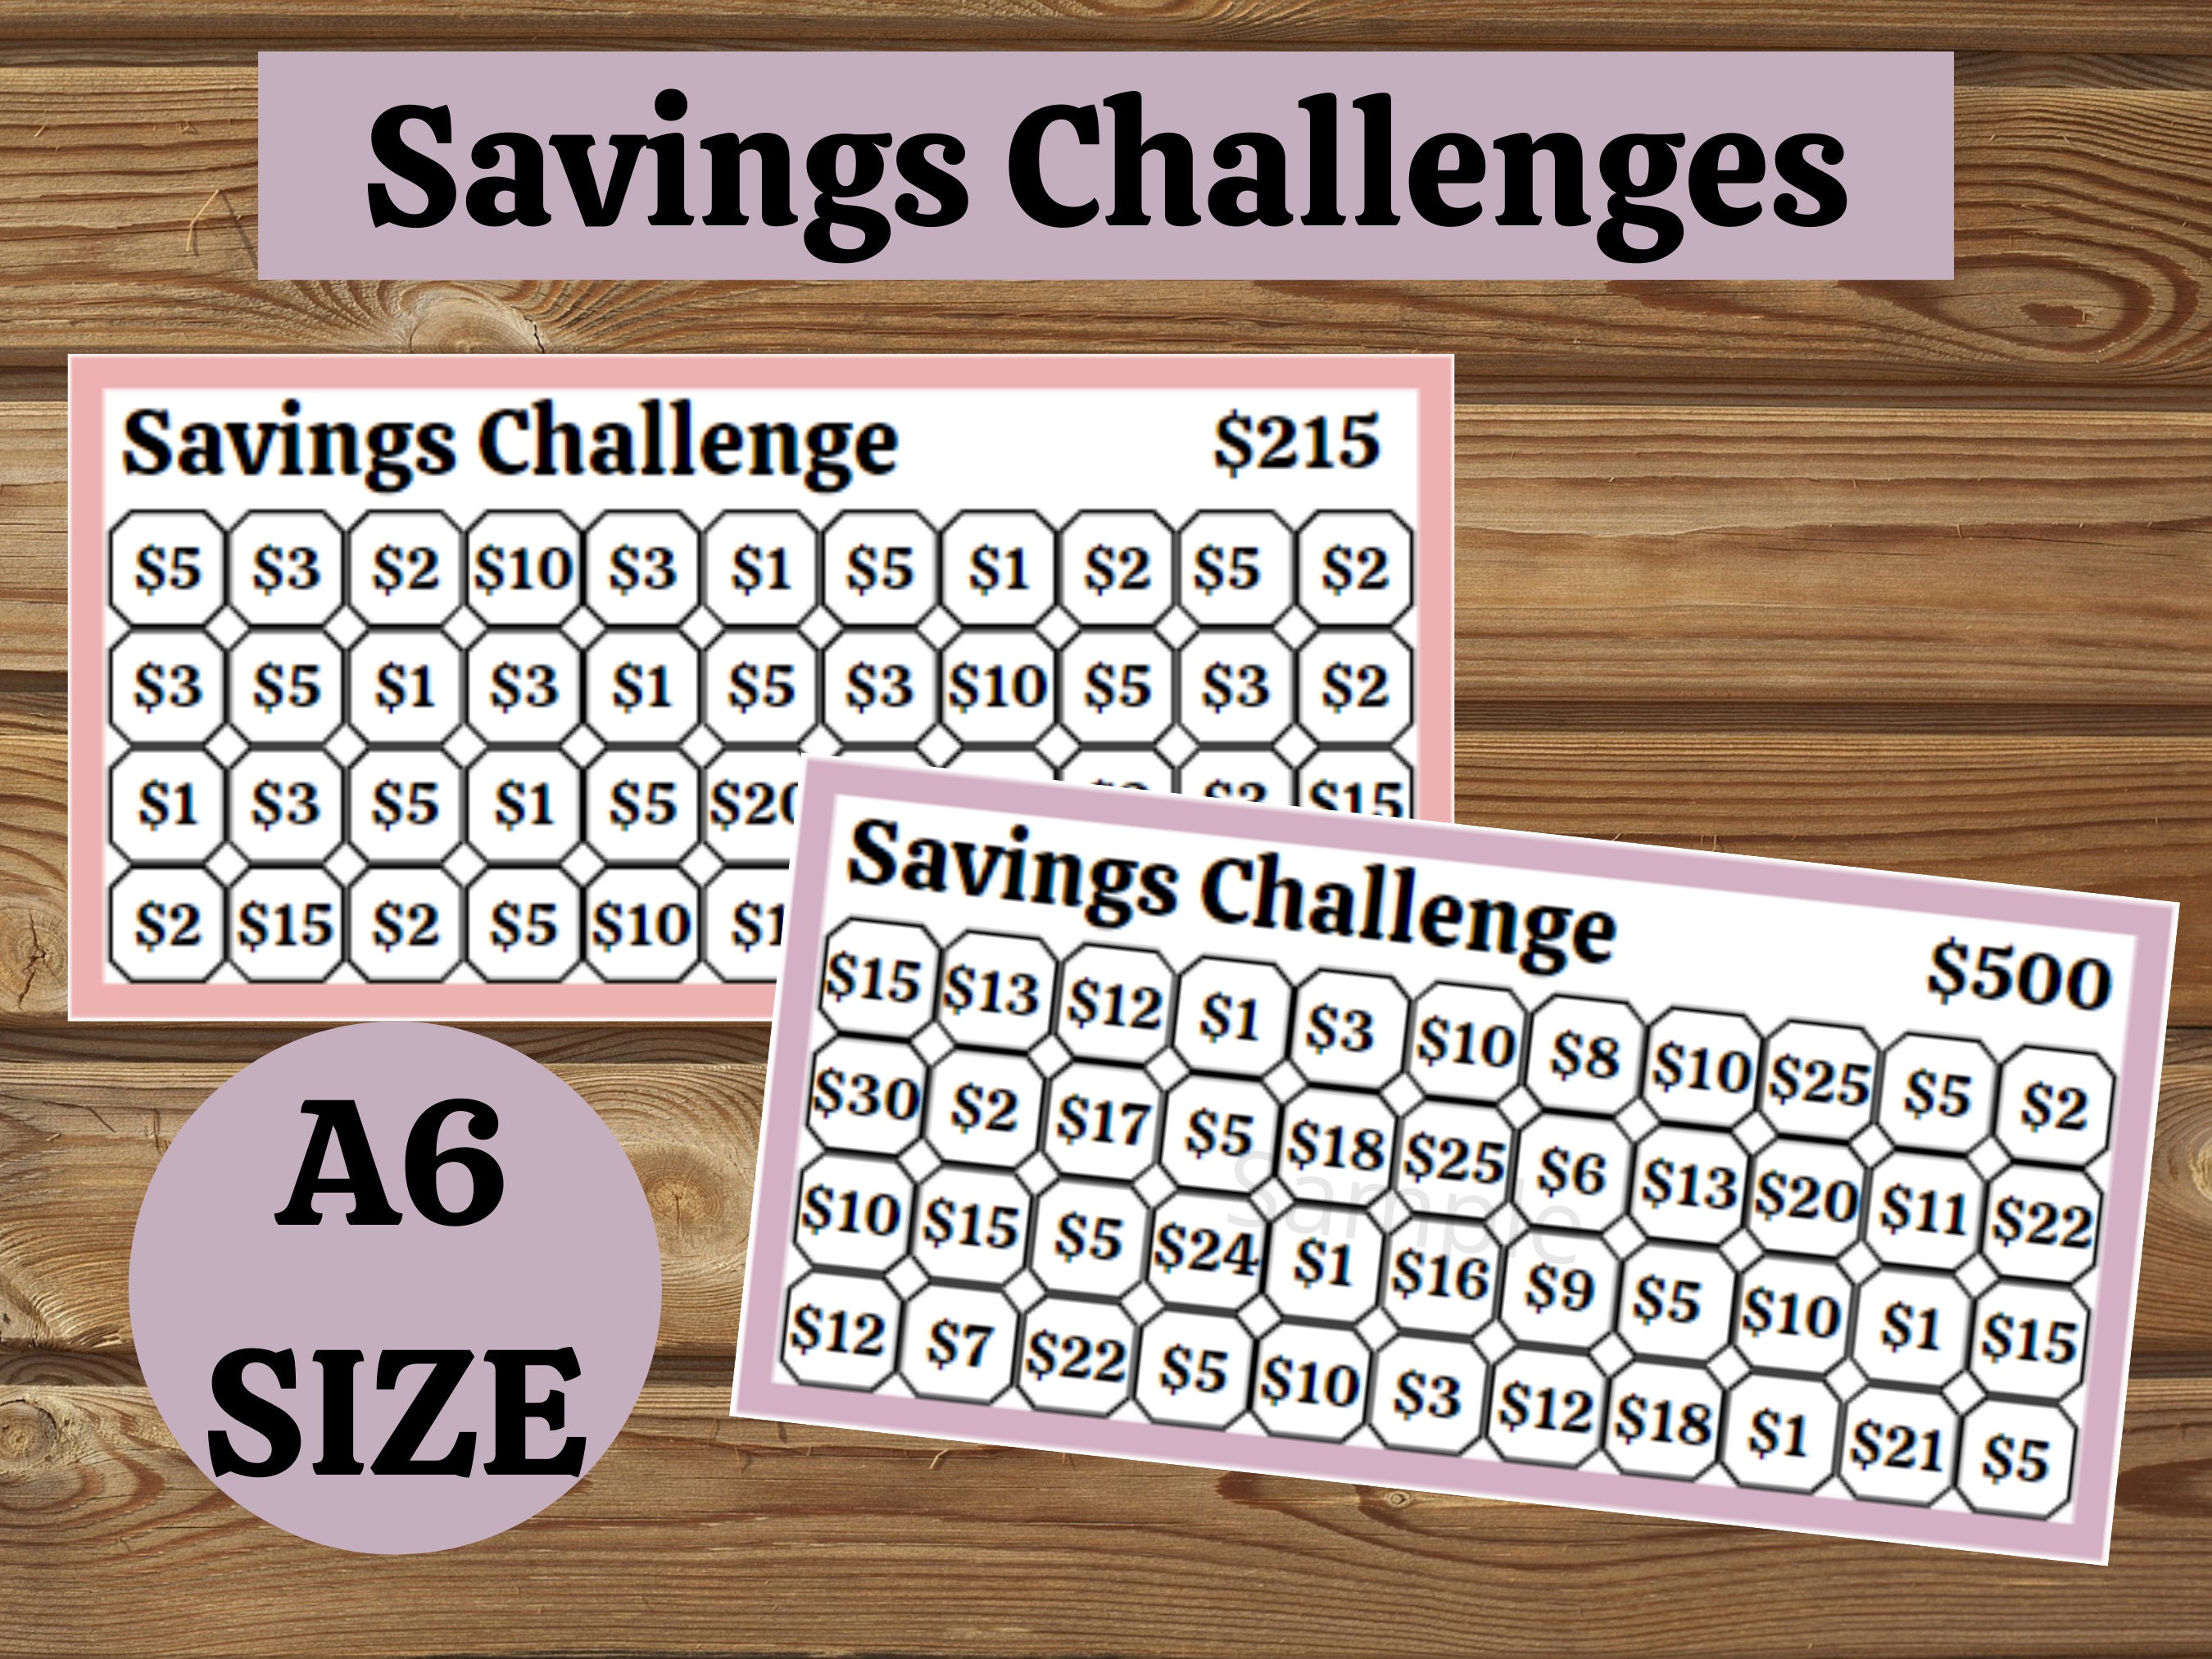 Cash stuffing my savings challenge binders! I love having